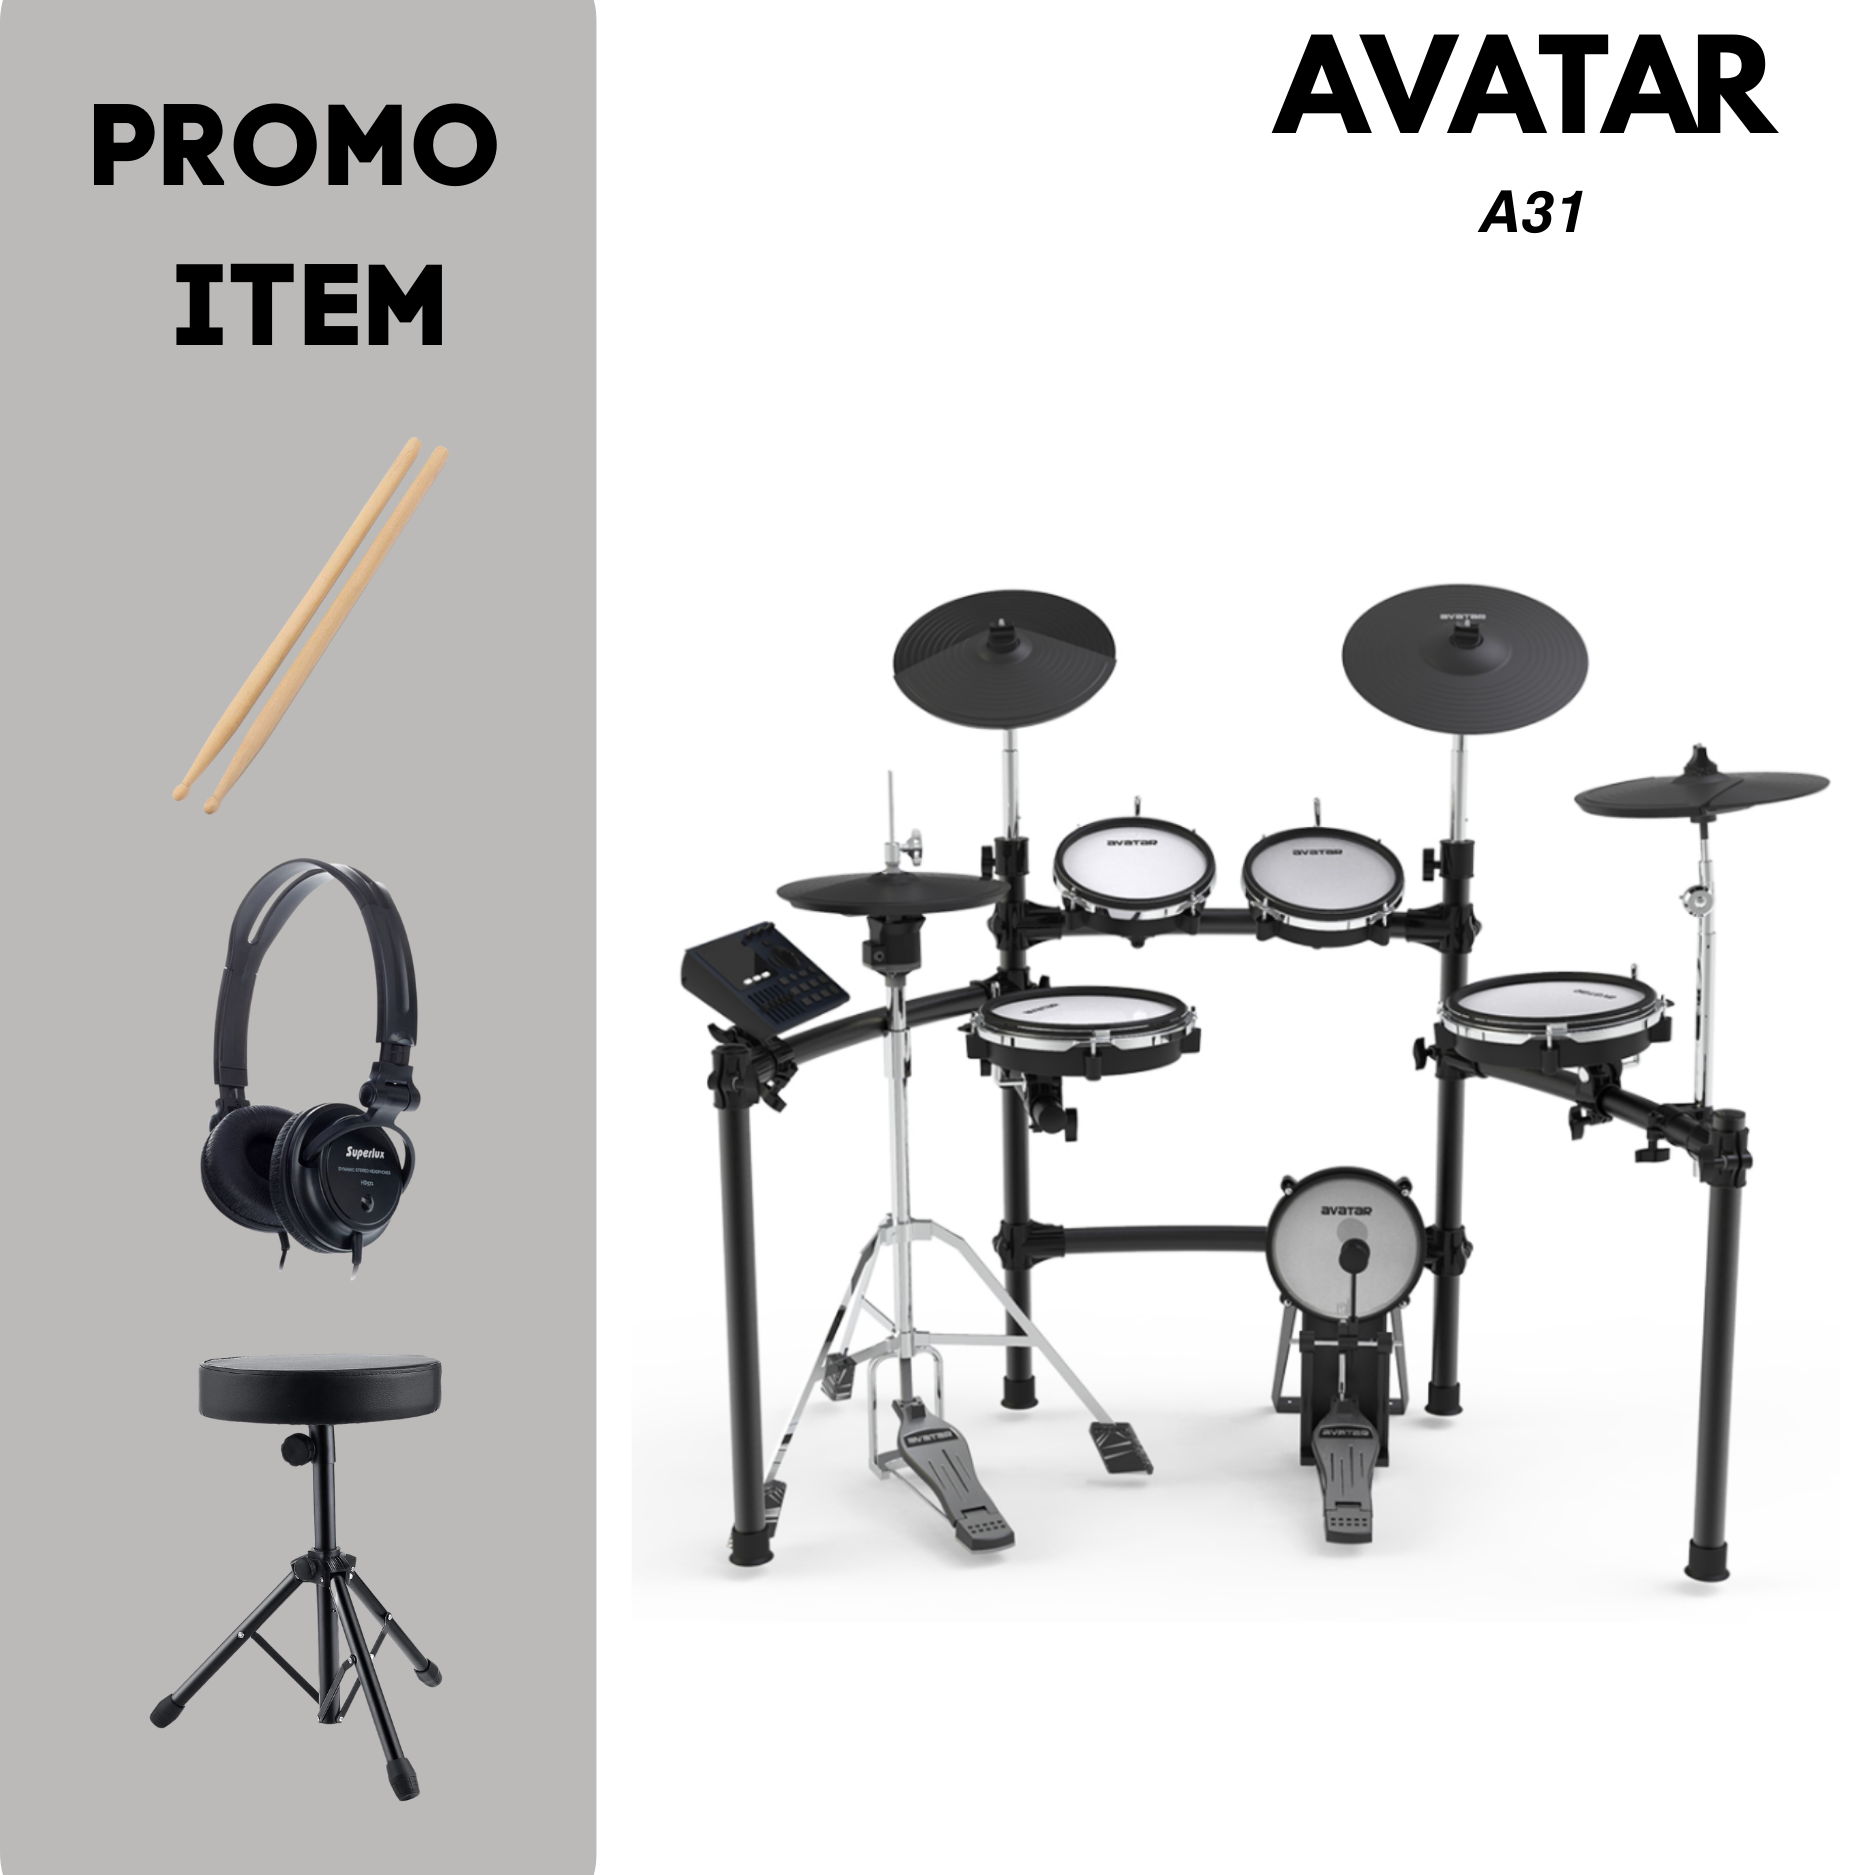 Avatar A31 9pcs Electronic Digital Drum with Mesh Head, Free Throne, Headphone, Drumsticks